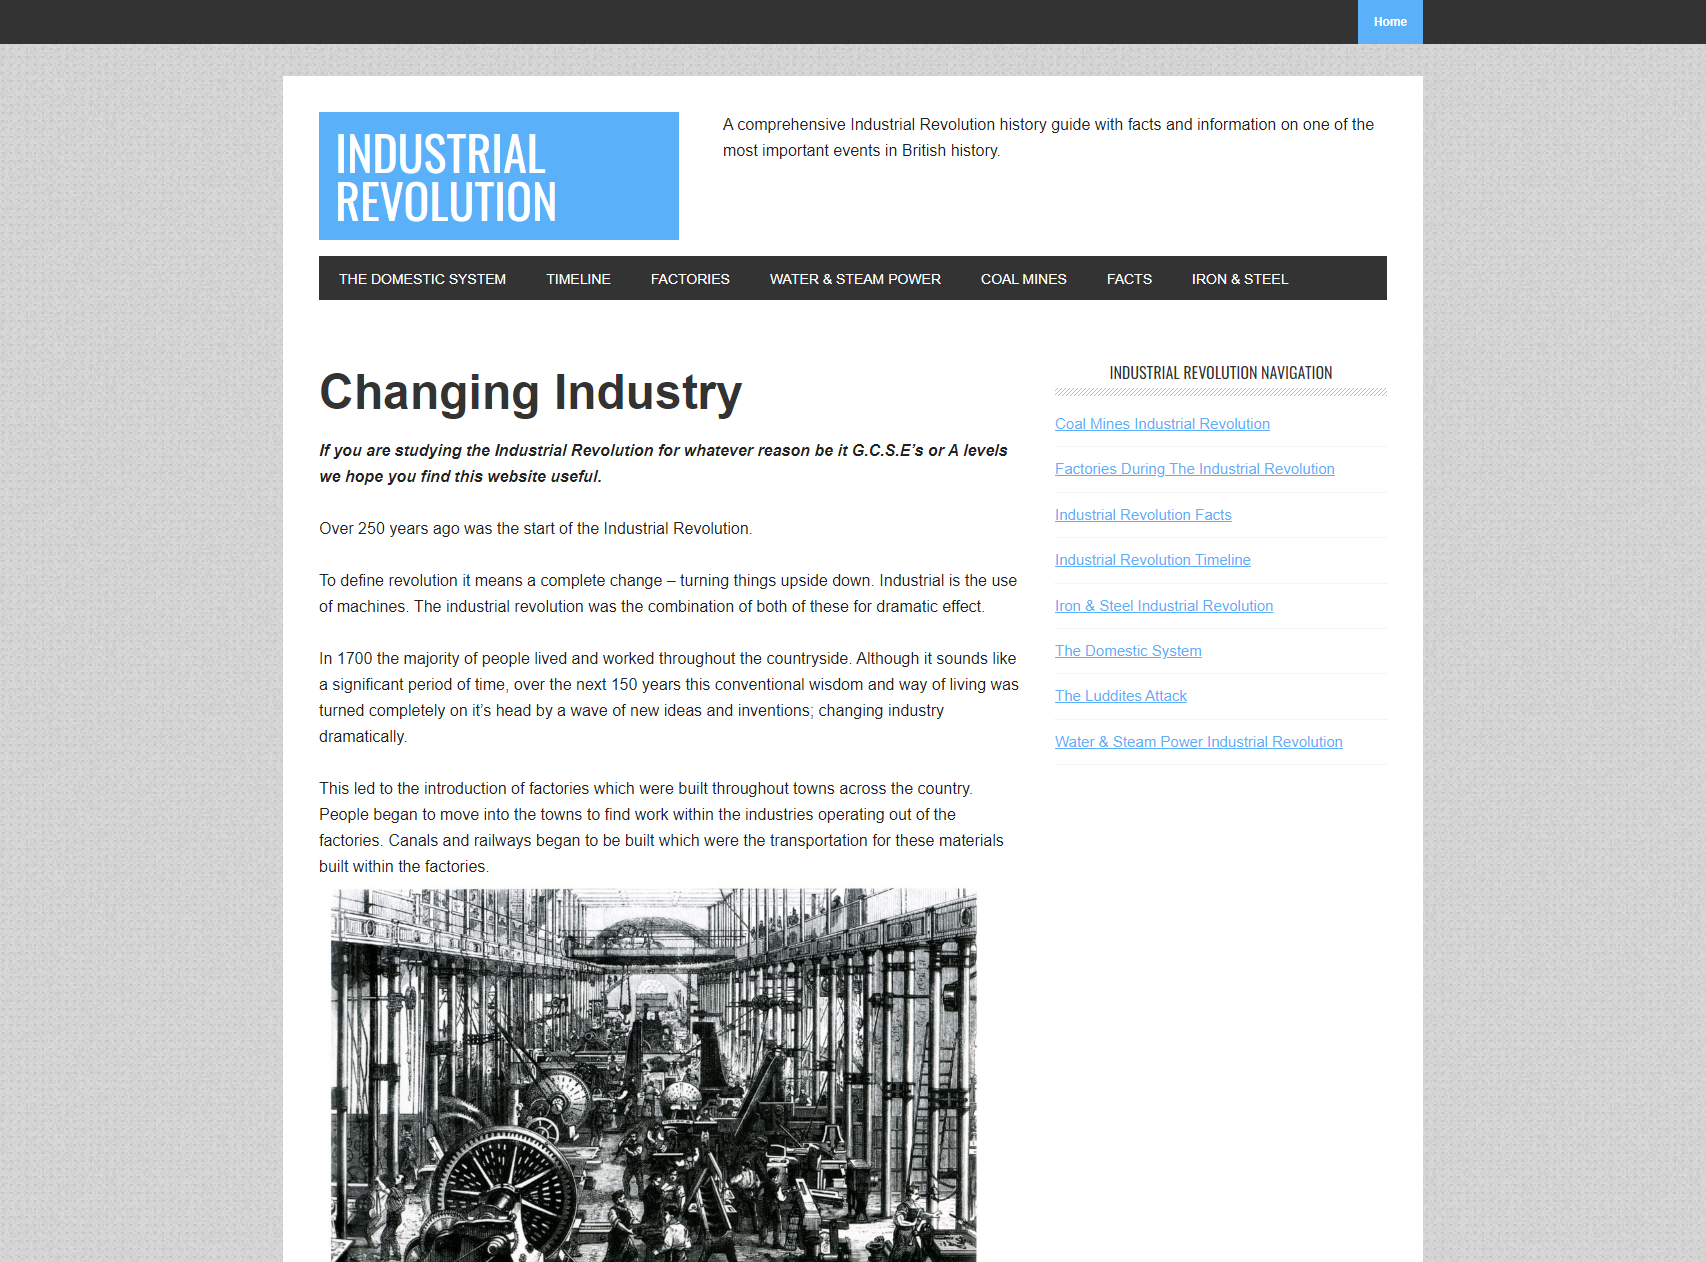 Industrialrevolution.org.uk